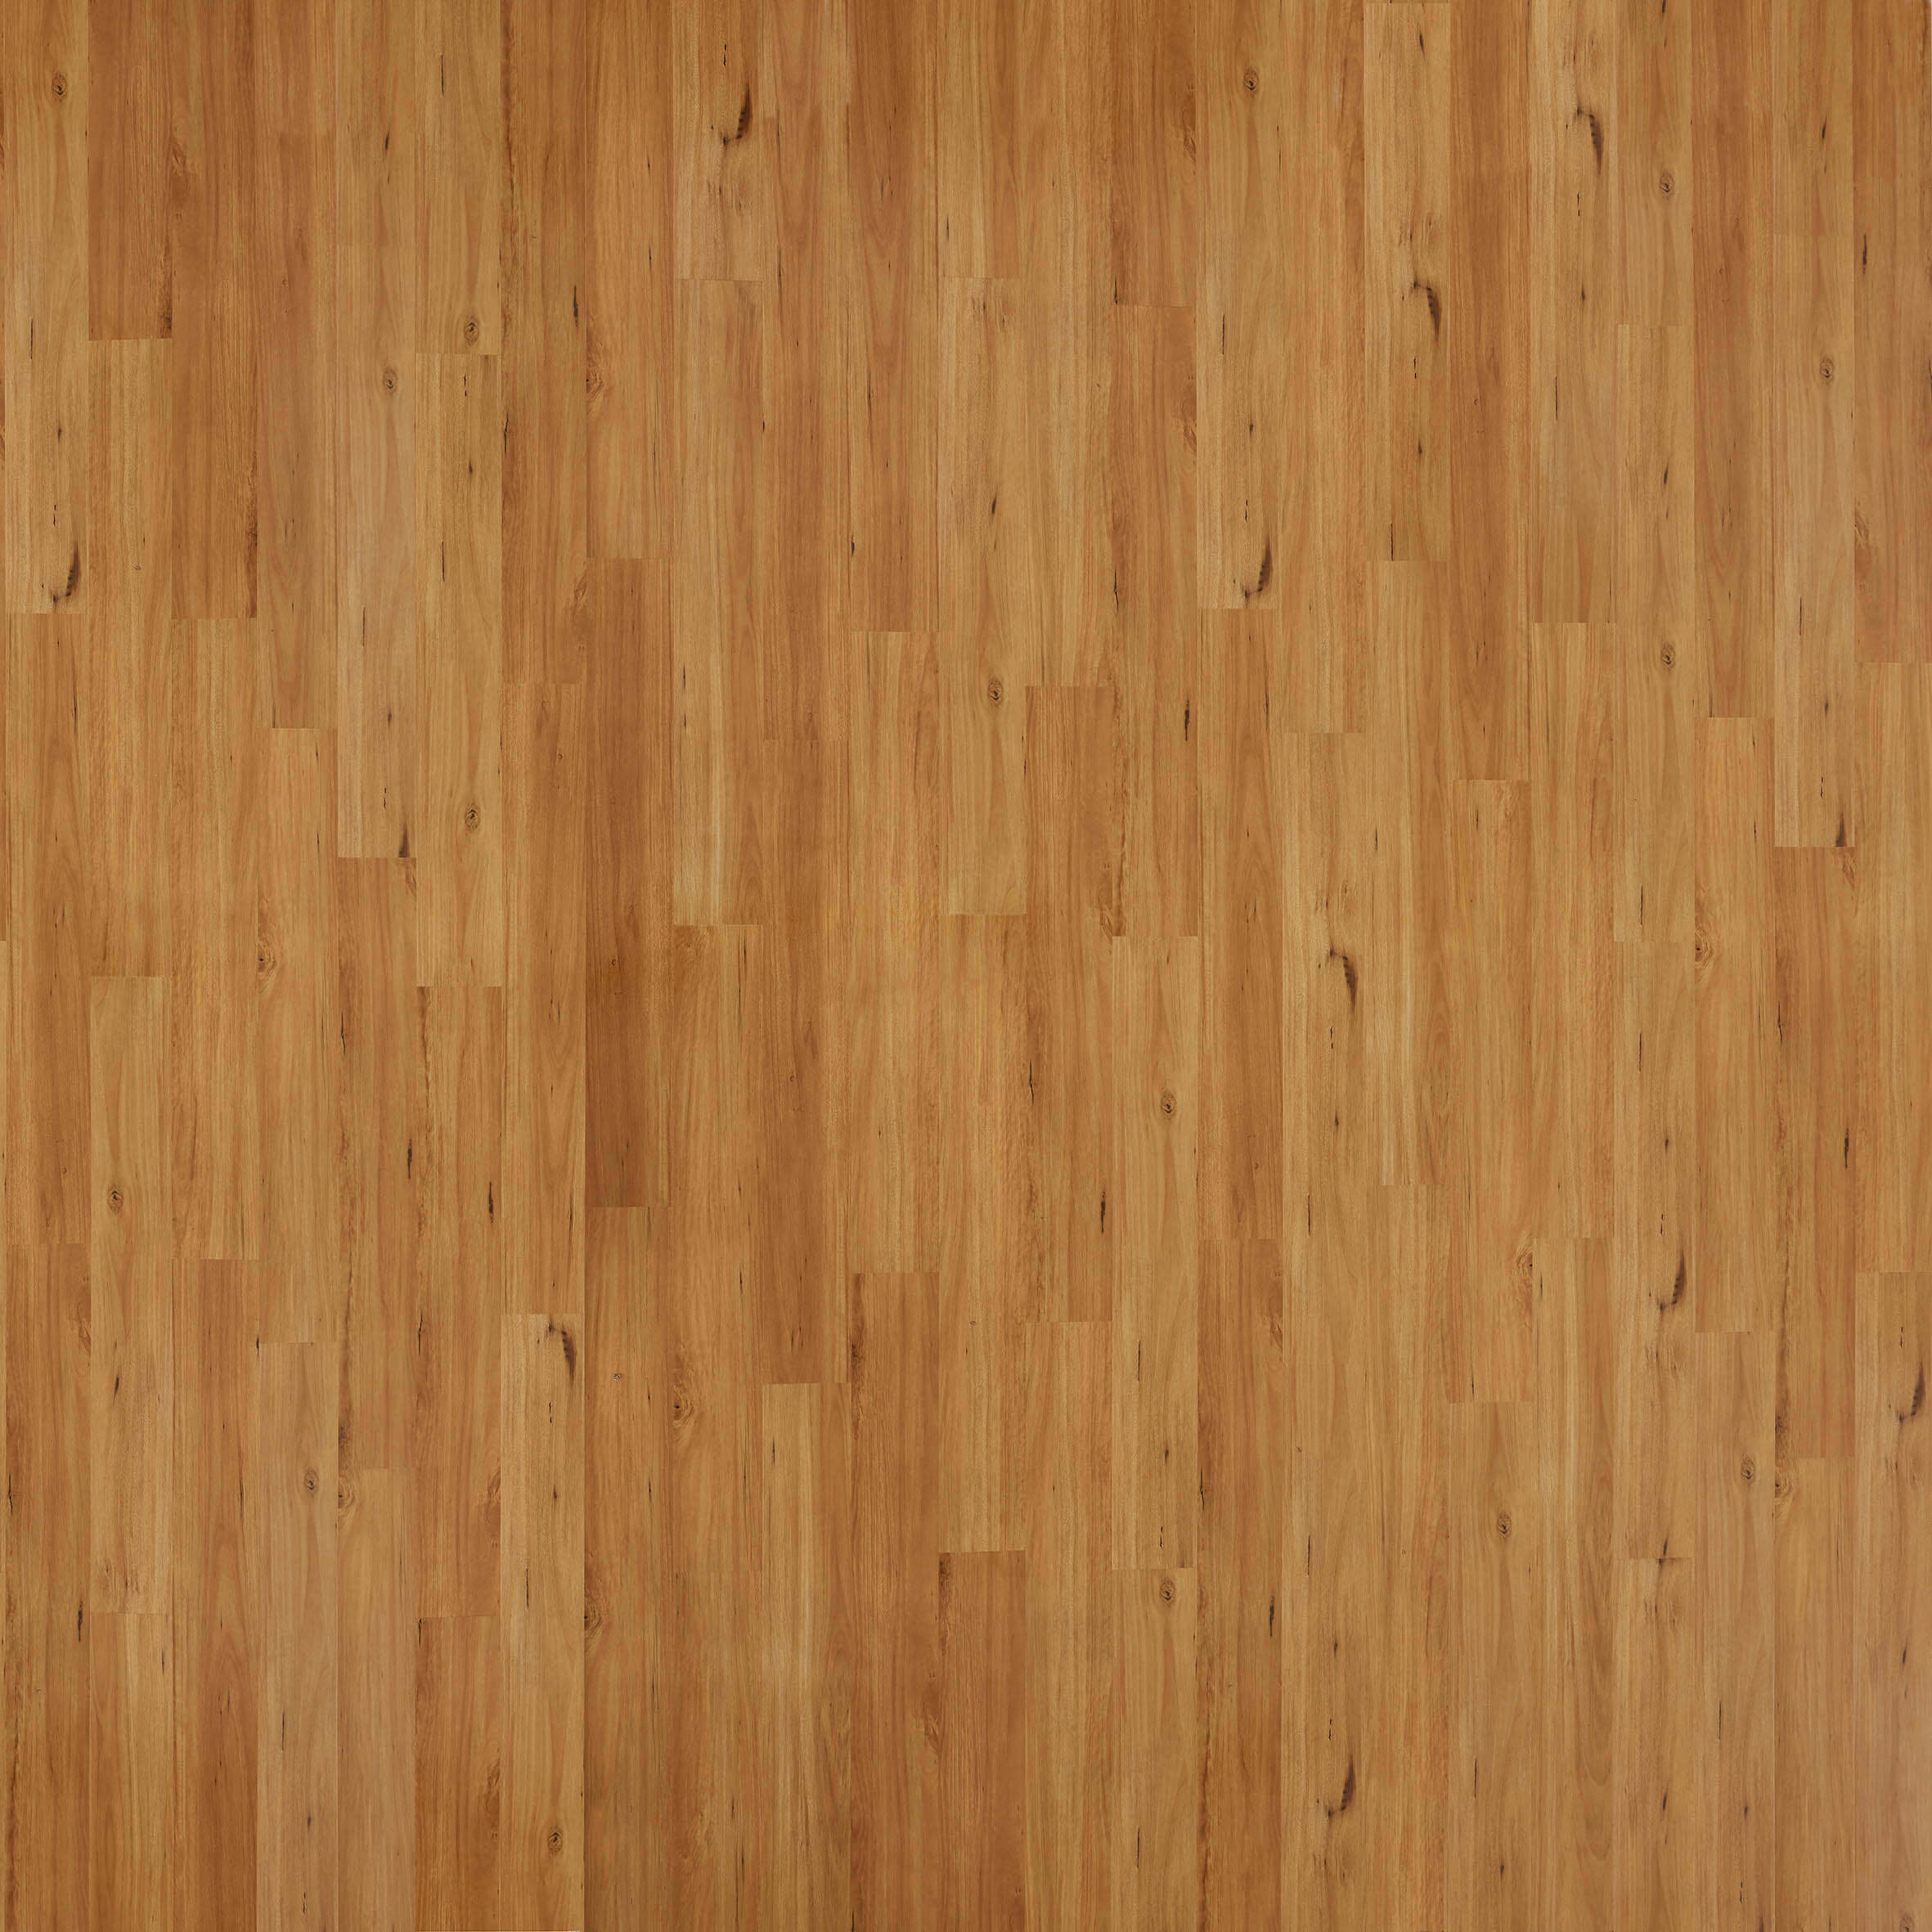 Airstep Eucalyptus Steps Gloss Laminate Flooring Blackbutt - Online Flooring Store